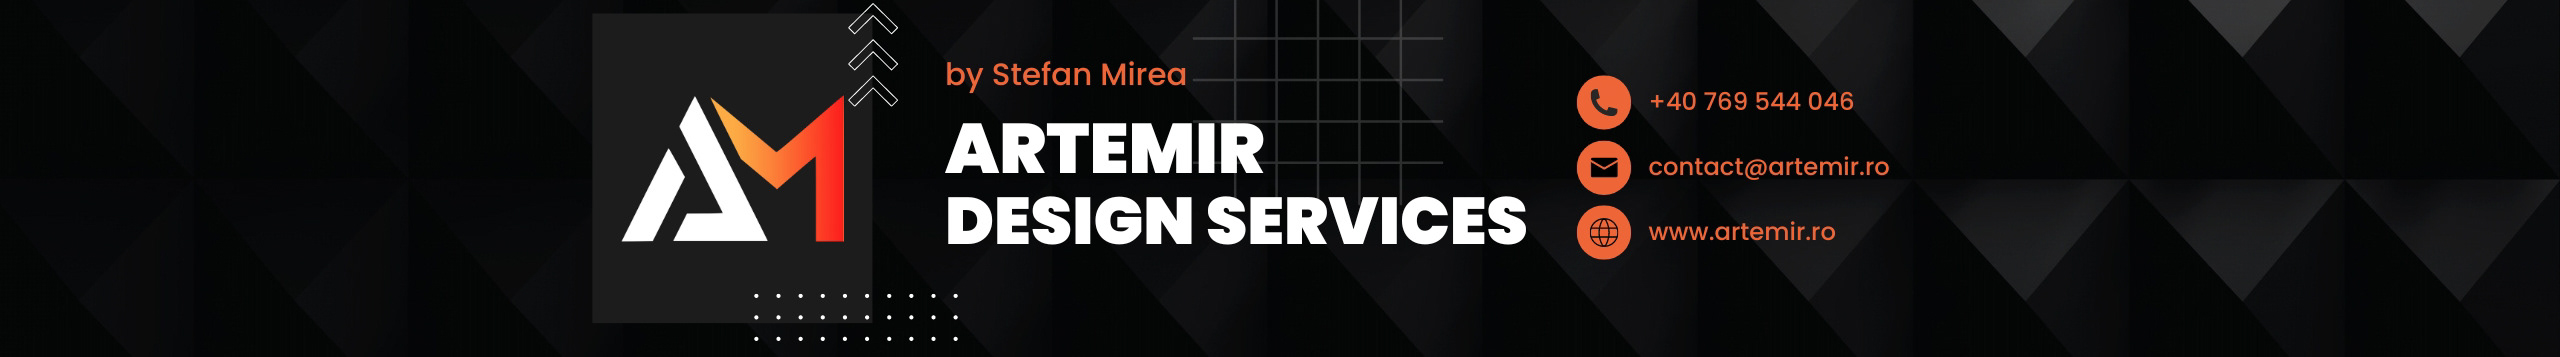 Artemir Design Services's profile banner